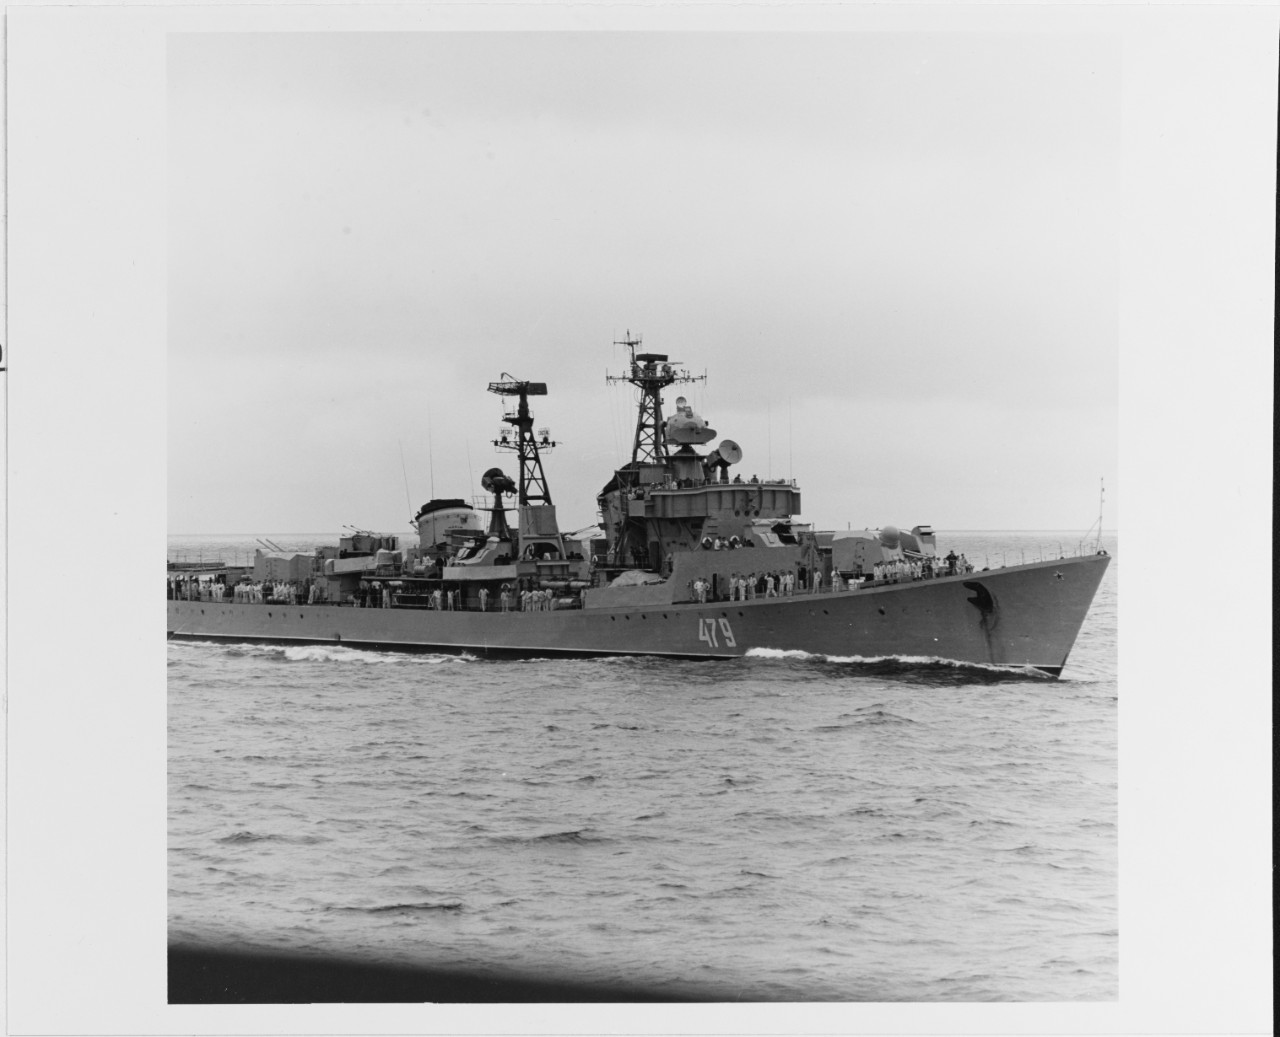 Soviet "KOTLIN" class destroyer